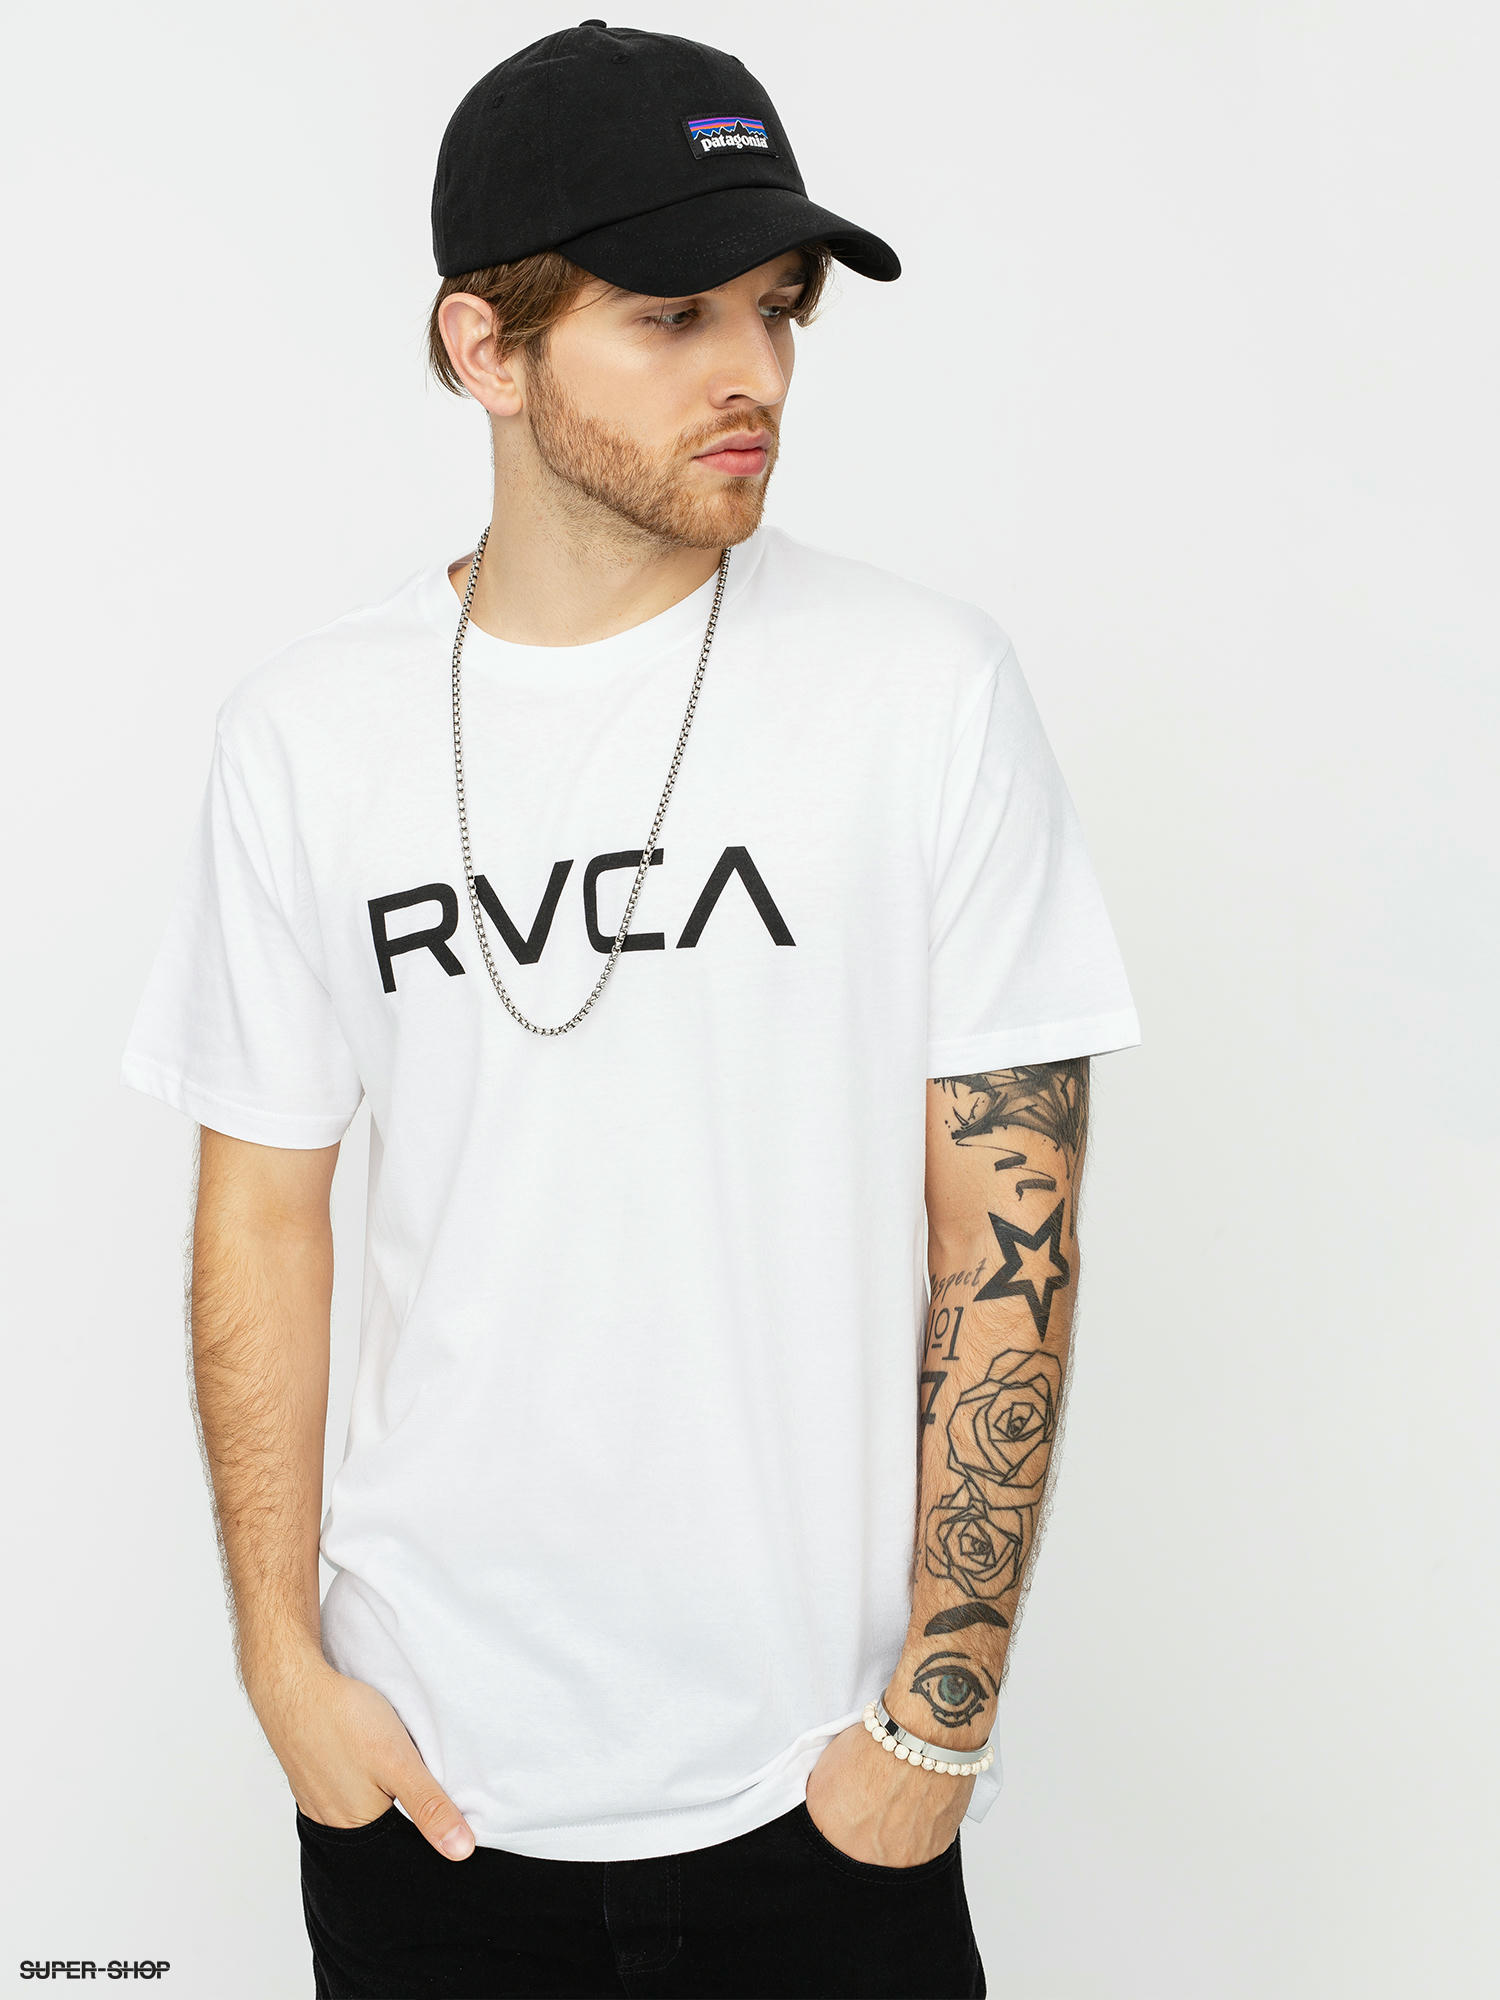 https://static.super-shop.com/1148768-rvca-big-rvca-tshirt-white.jpg?w=1920